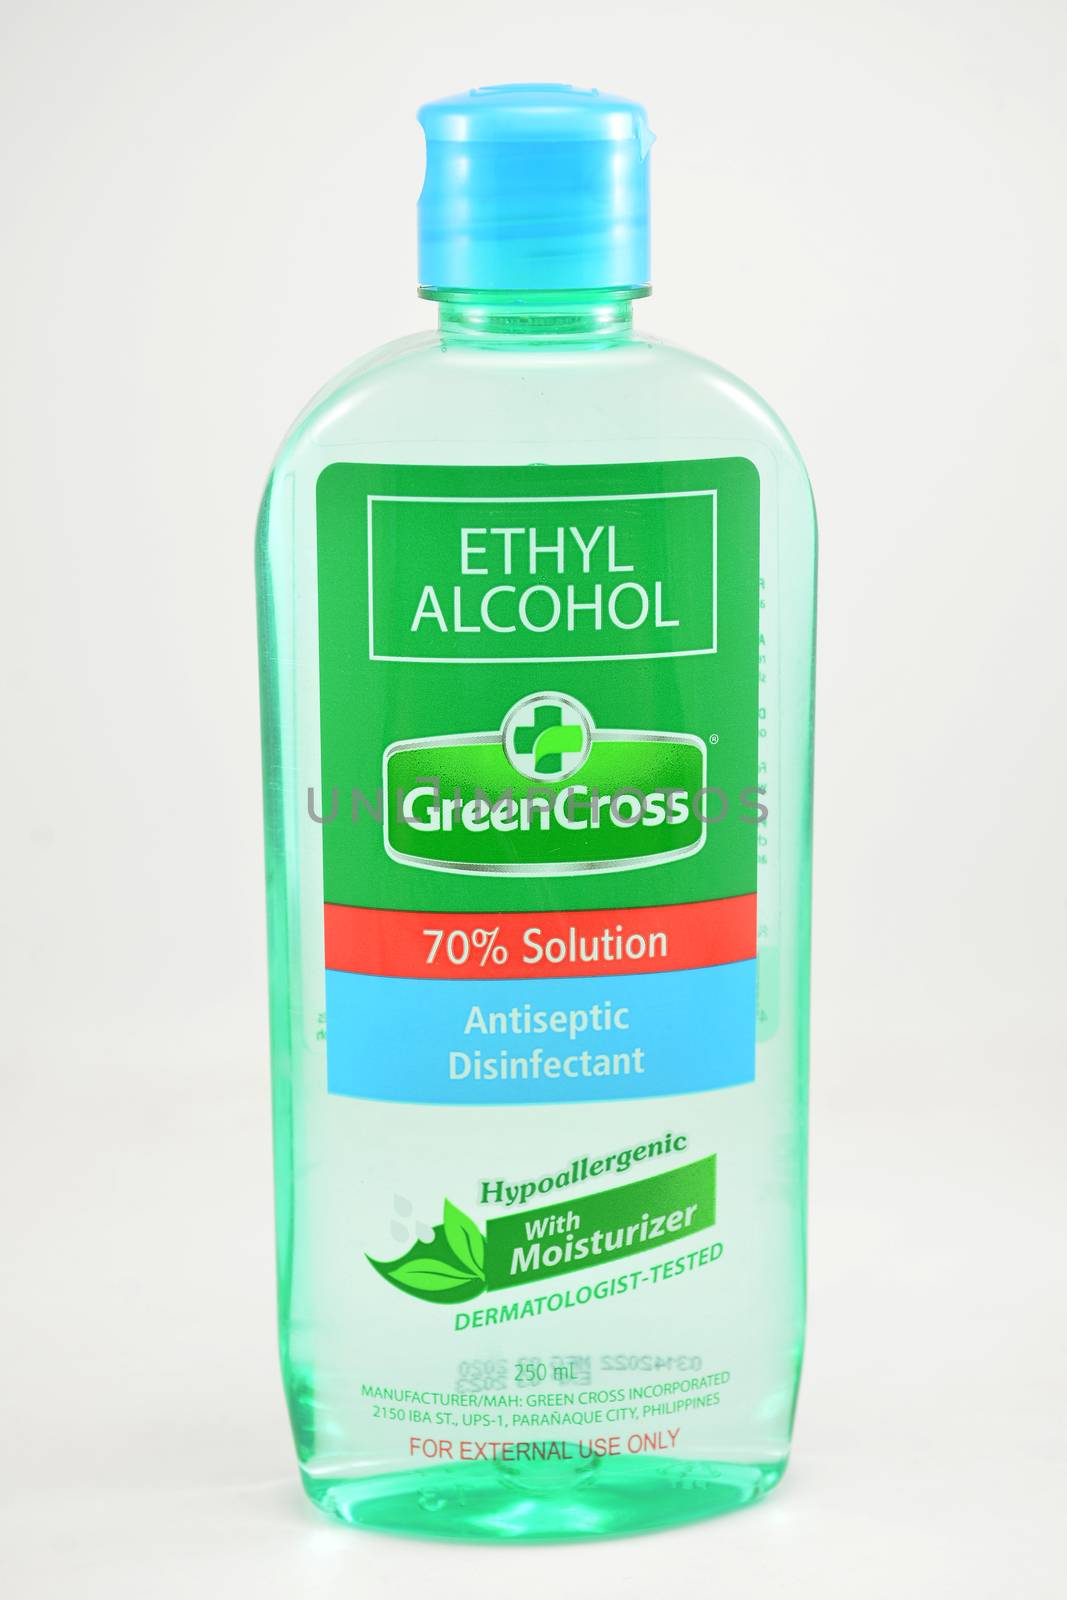 Green cross ethyl alcohol in Manila, Philippines by imwaltersy